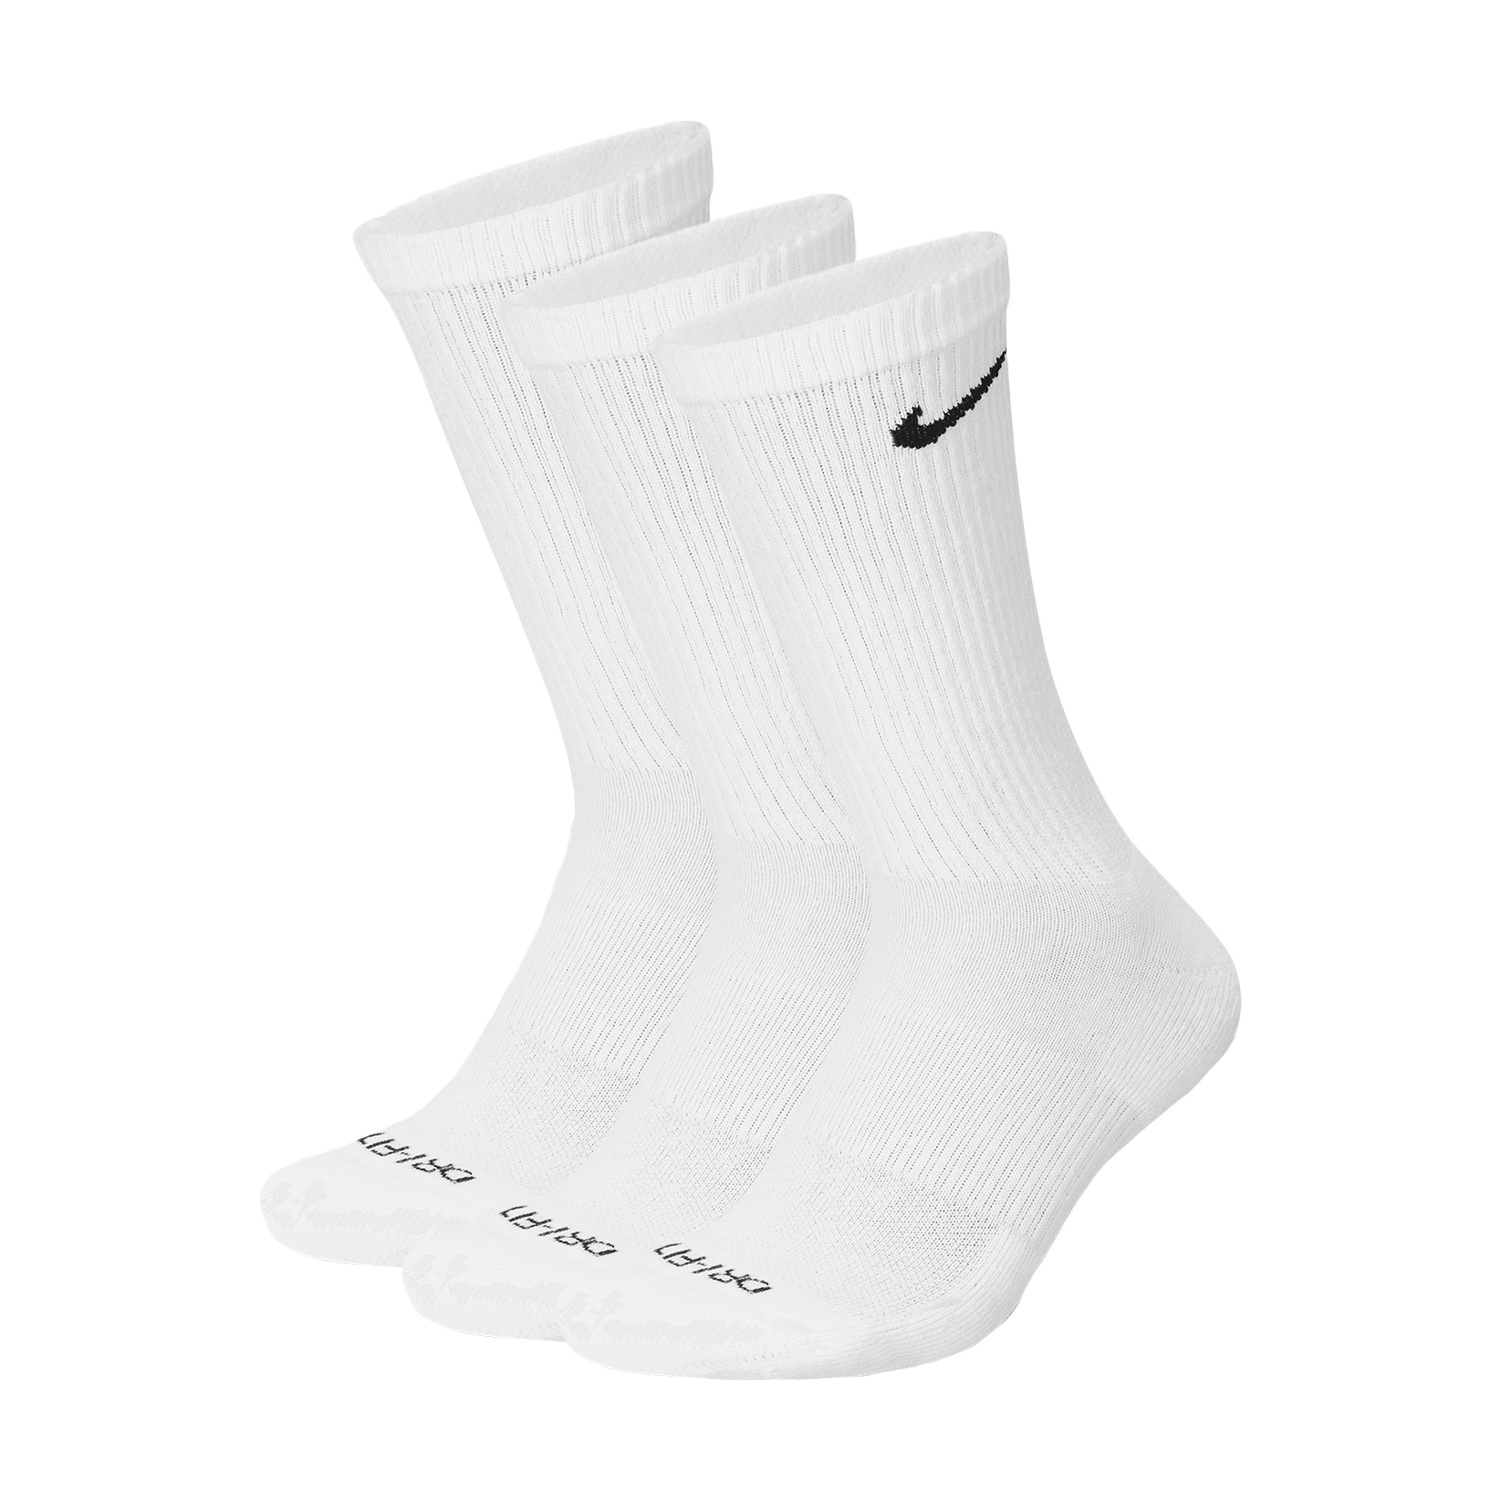 Nike Everyday Plus Cushioned x 3 Running Socks - White/Black